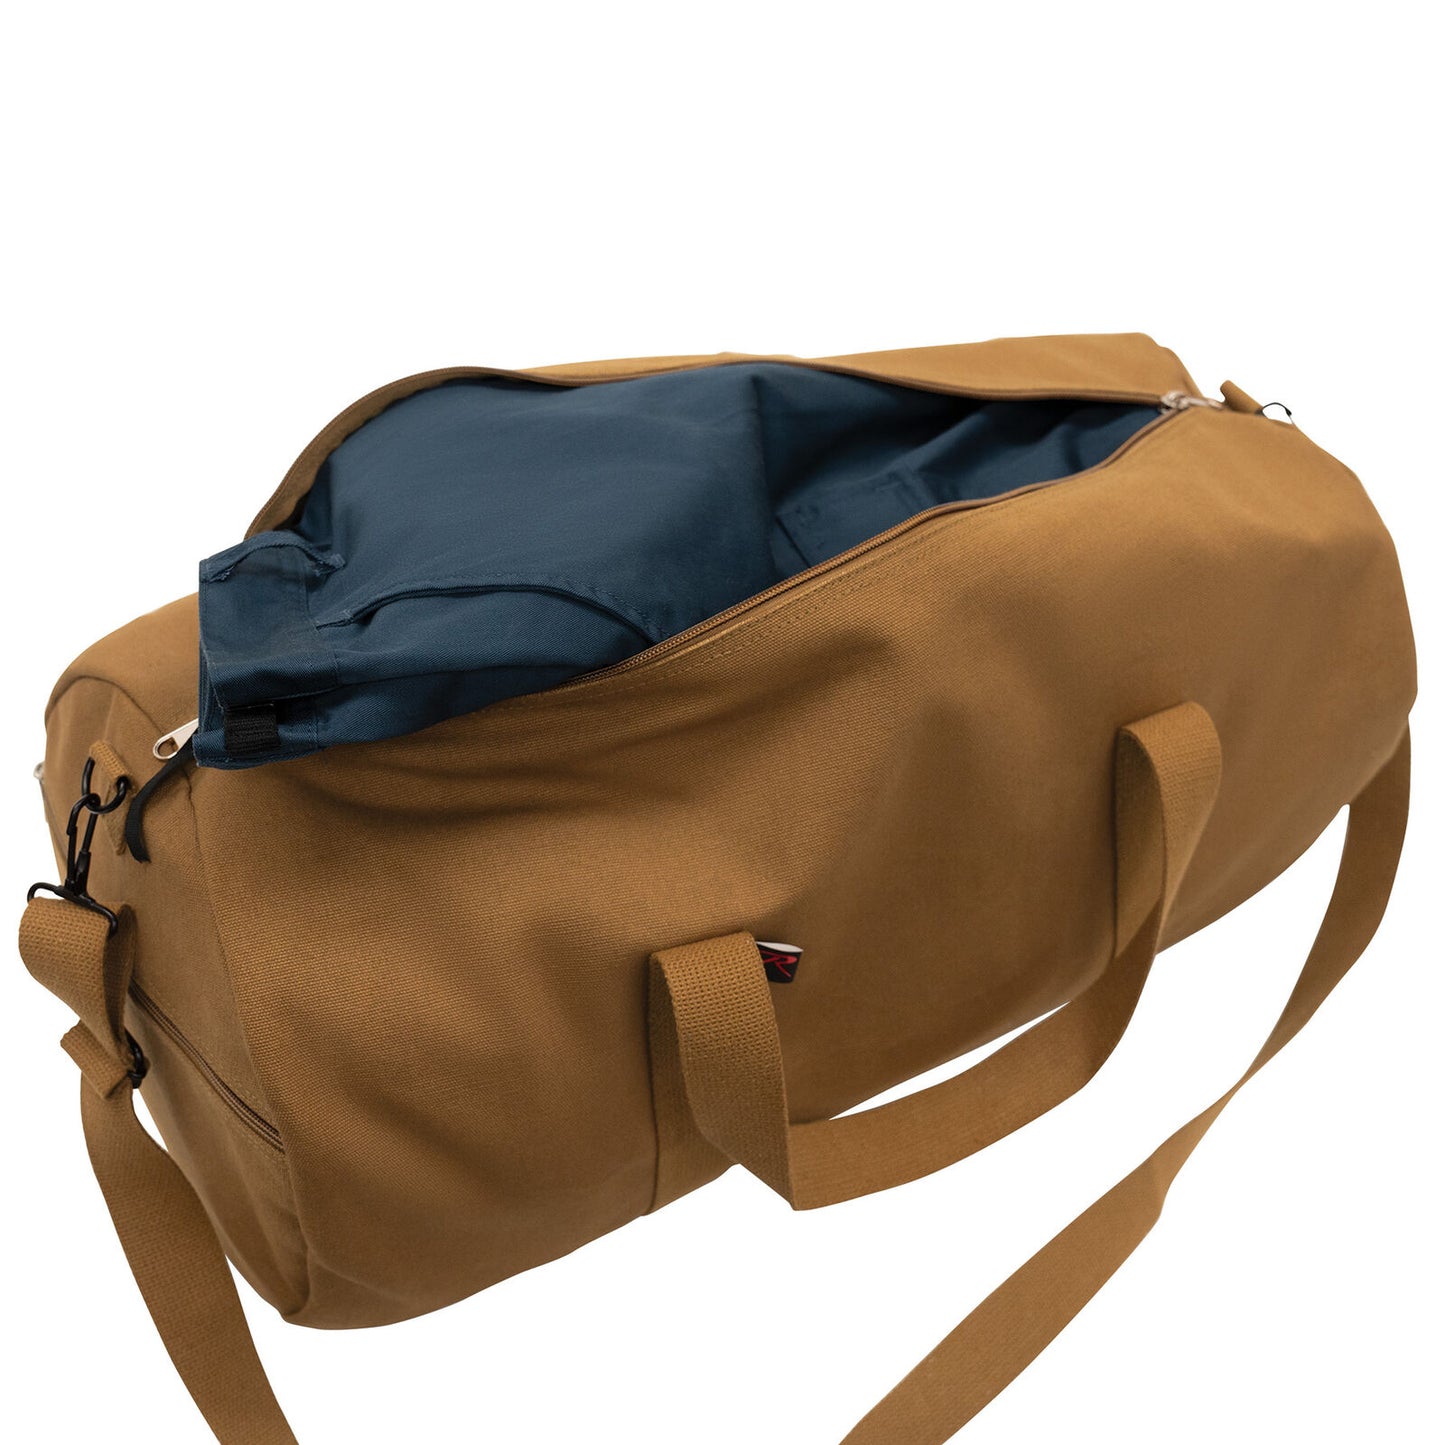 19 Inch Canvas Shoulder Duffle Bag In Work Brown - Heavyweight Travel Bag